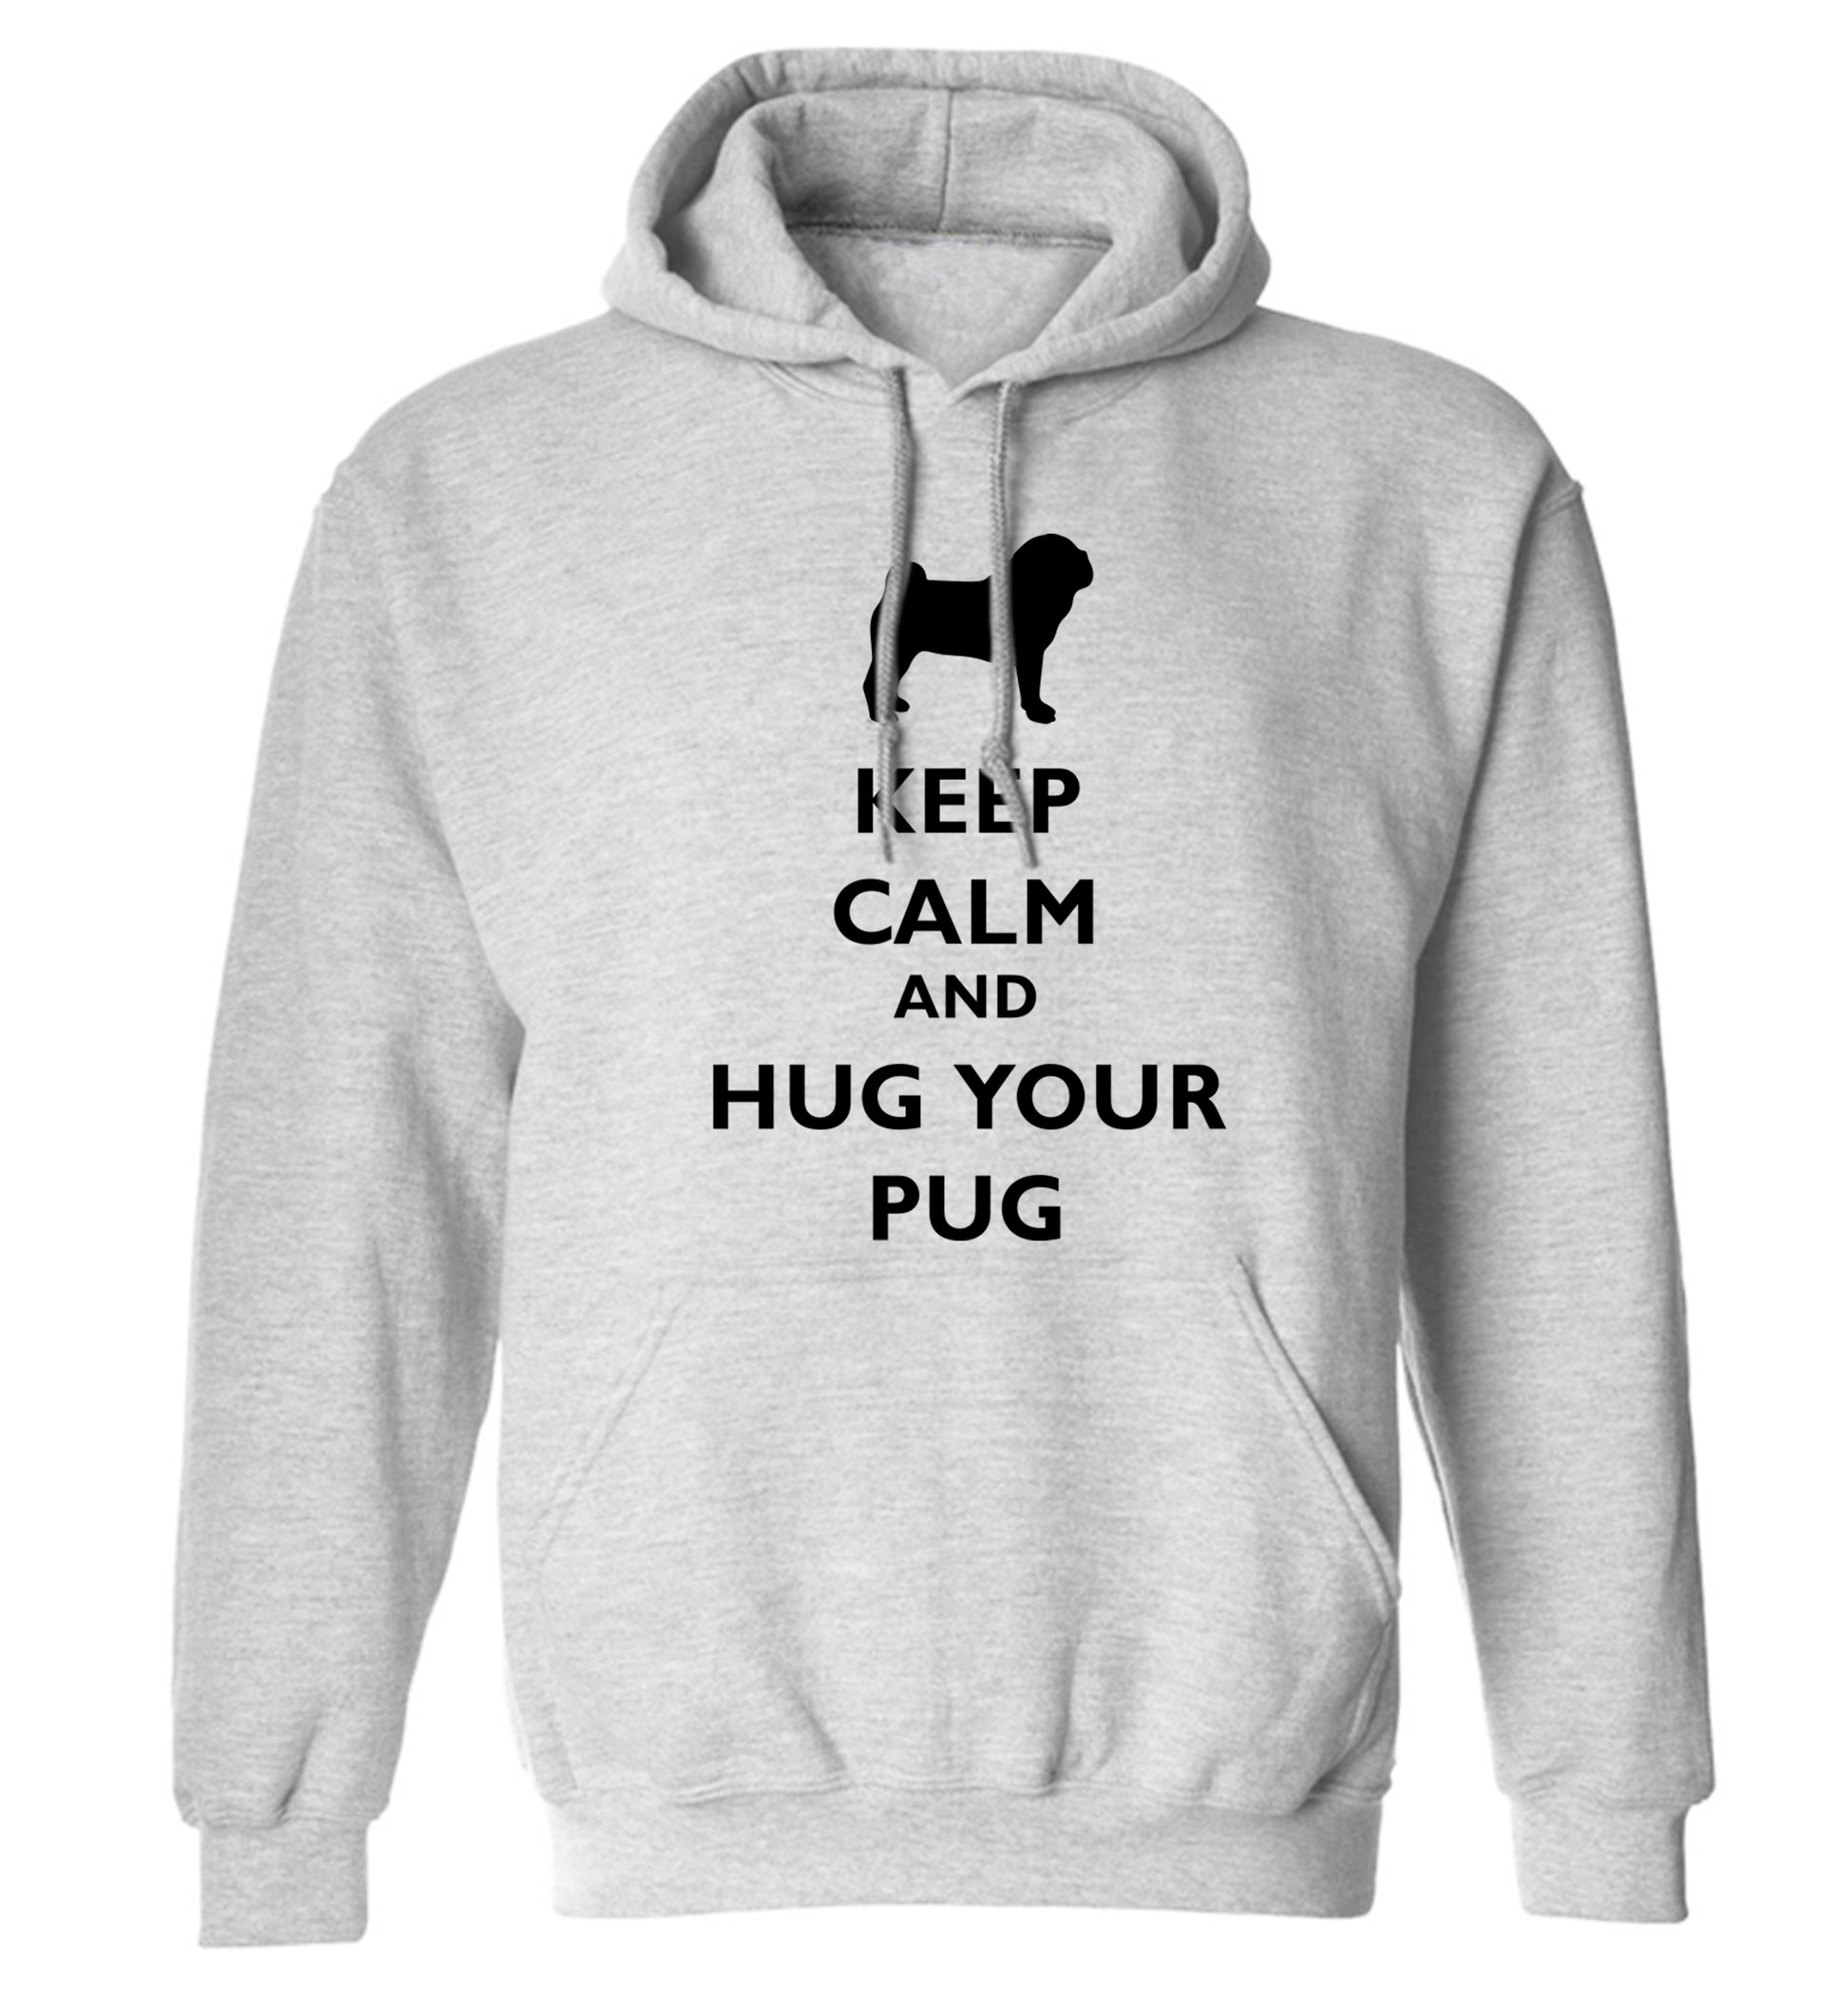 Keep calm and hug your pug adults unisex grey hoodie 2XL